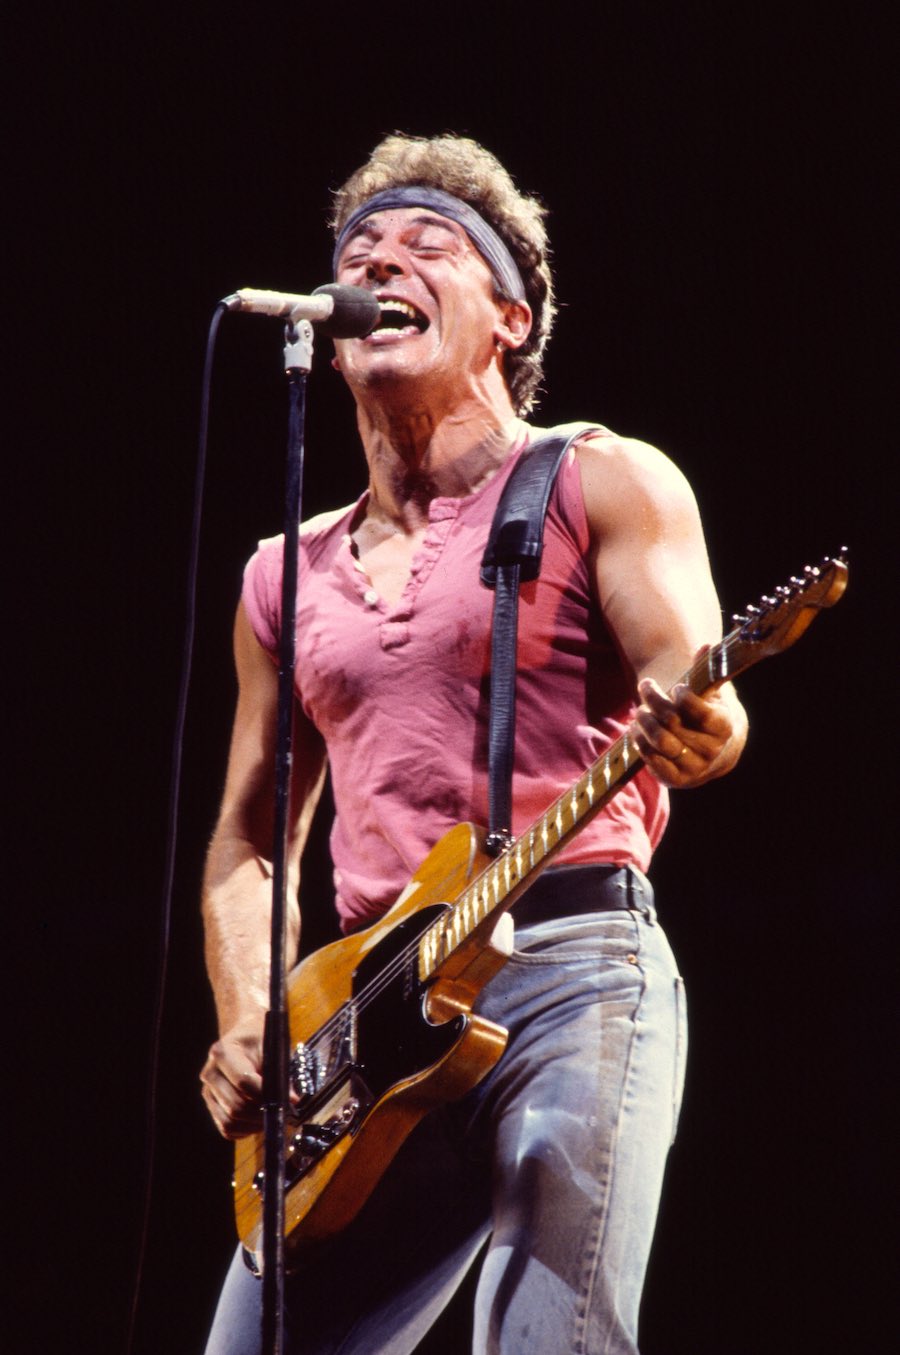 Bruce Springsteen in 1985